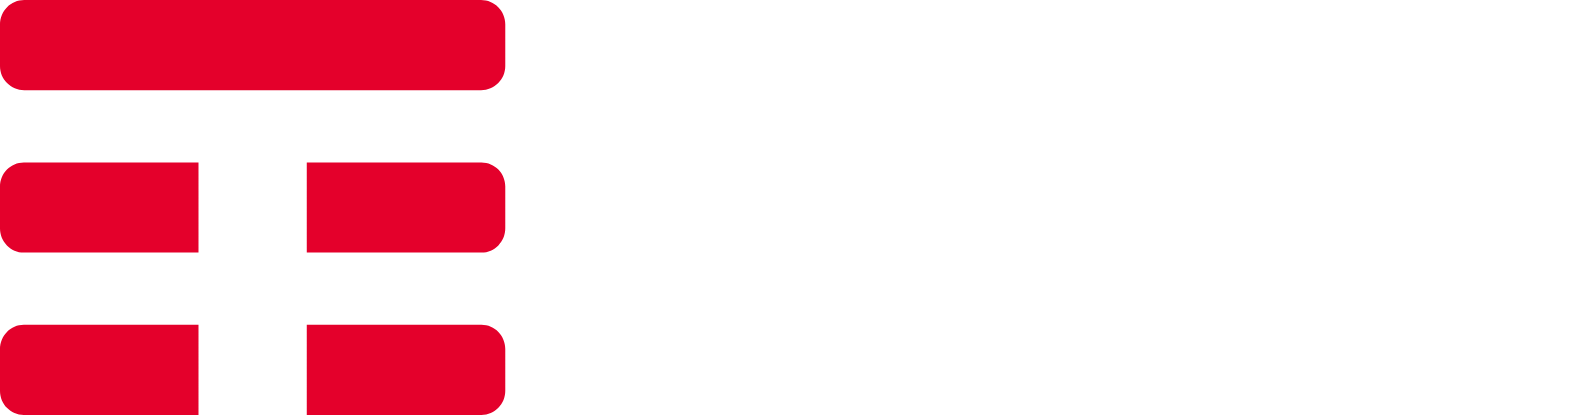 TIM Participacoes logo large for dark backgrounds (transparent PNG)